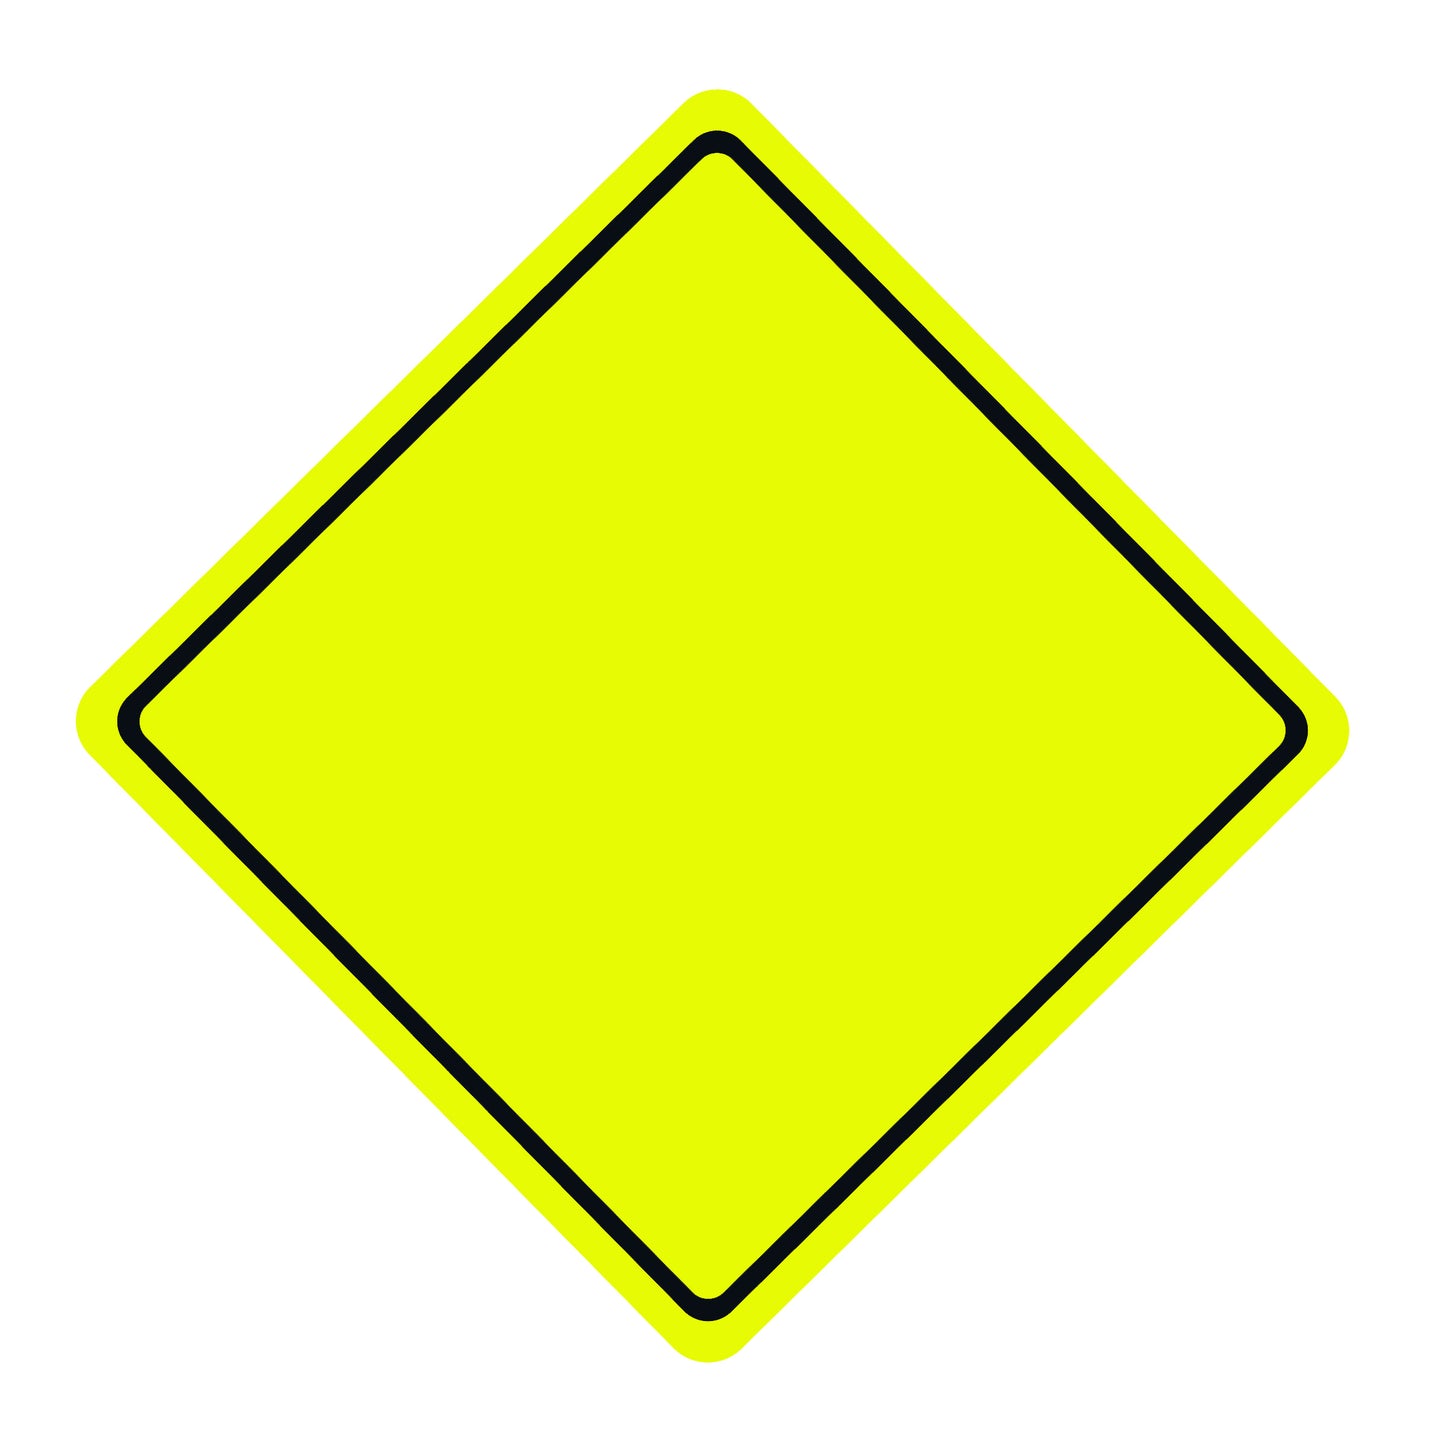 Customizable Novelty Diamond (Flourescent Yellow/Green) Sign